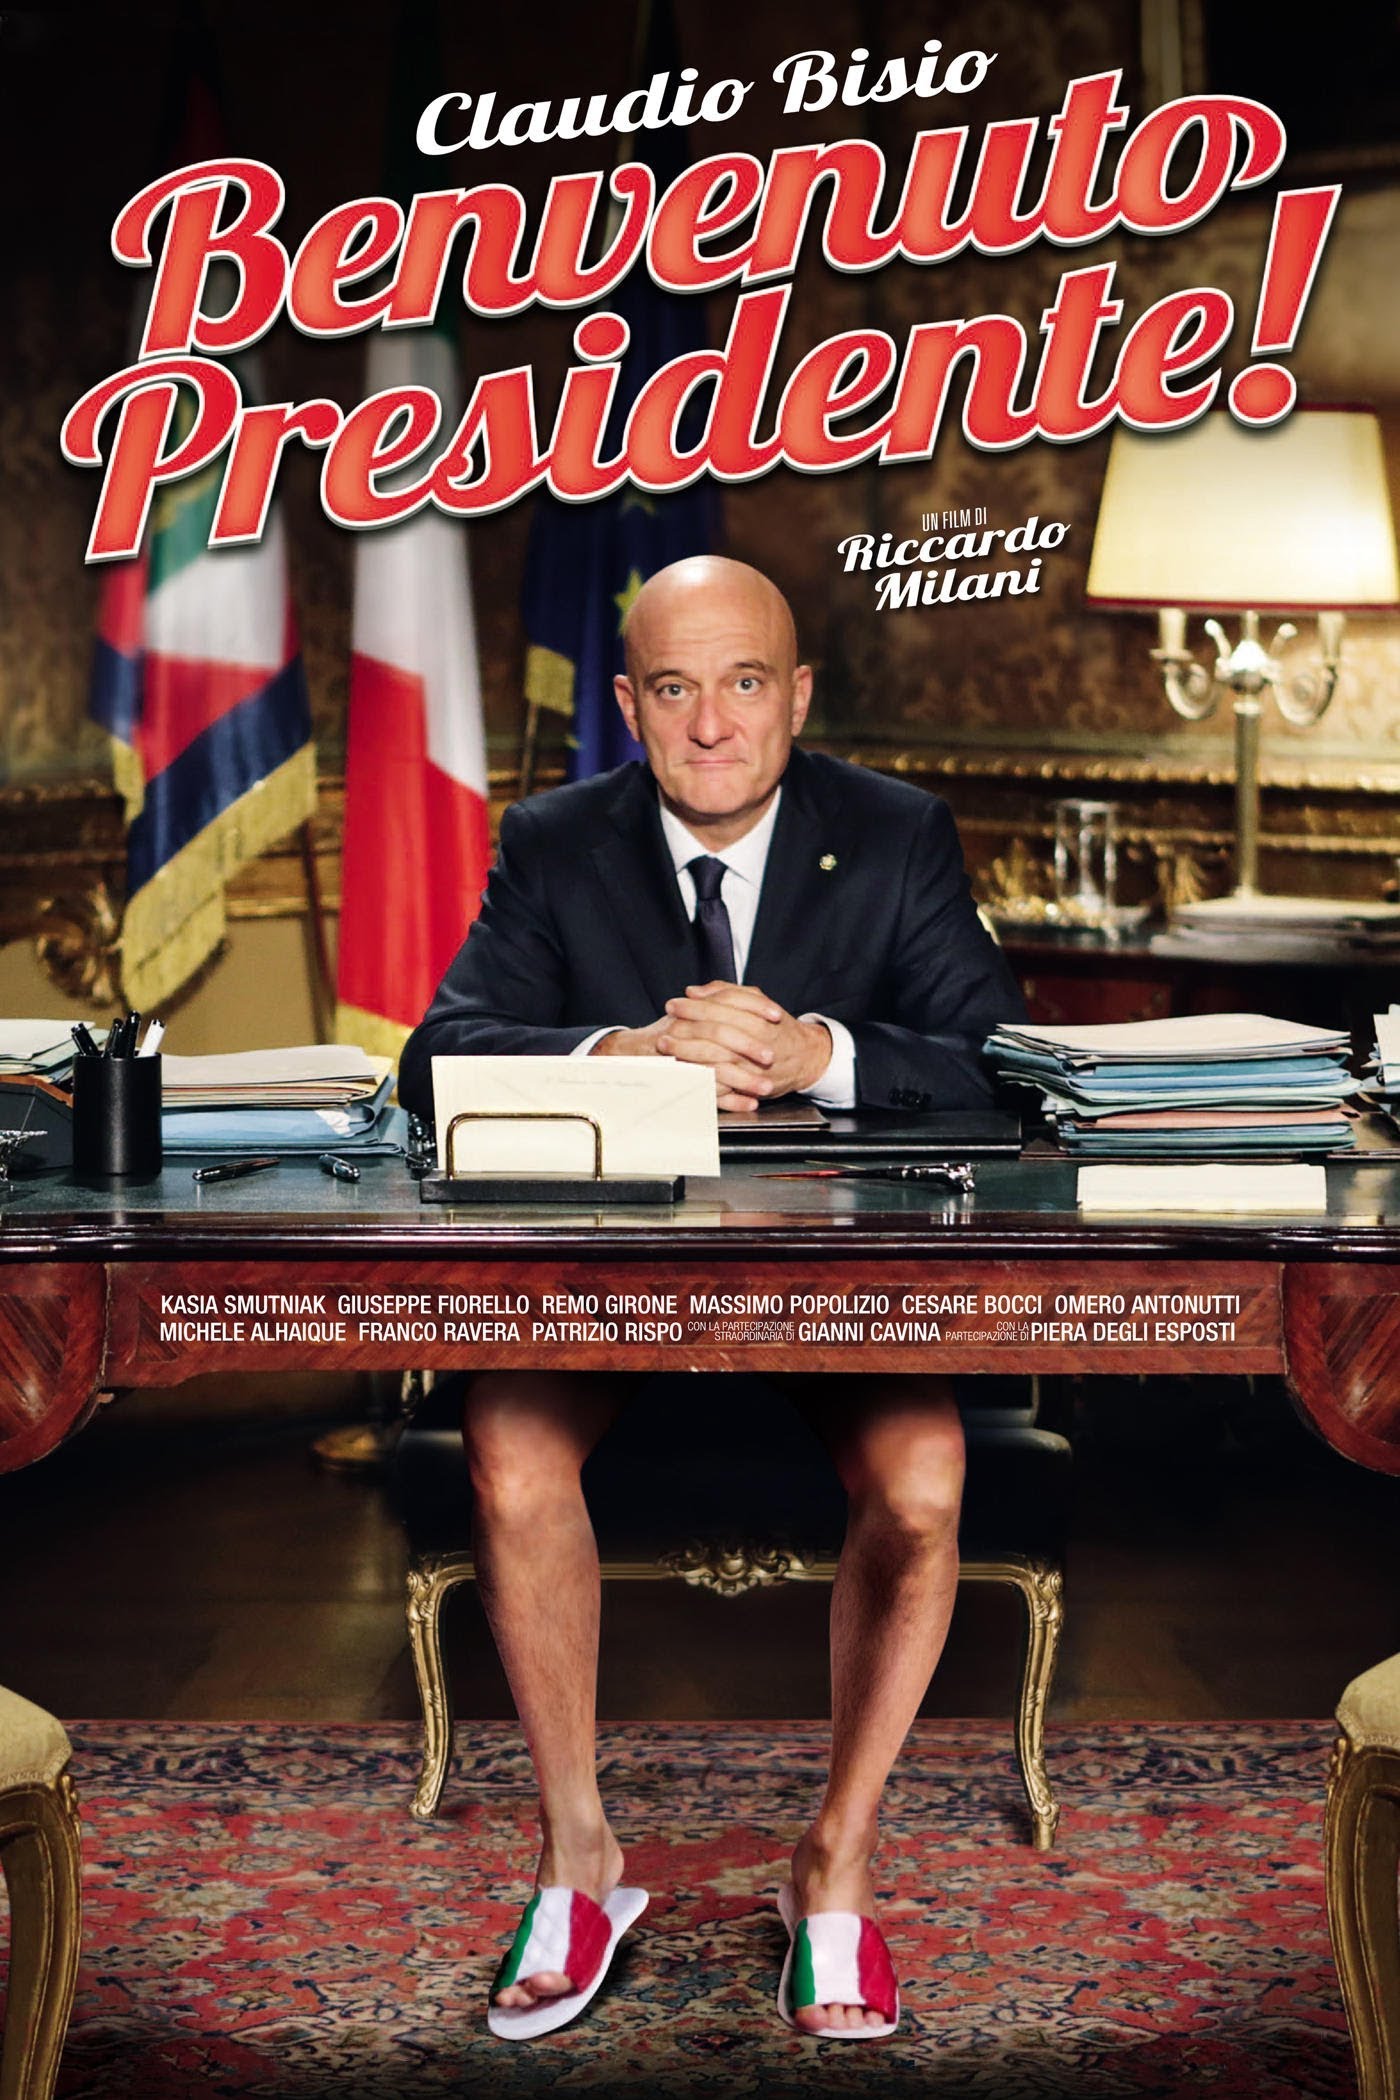 Benvenuto presidente! [HD] (2013)